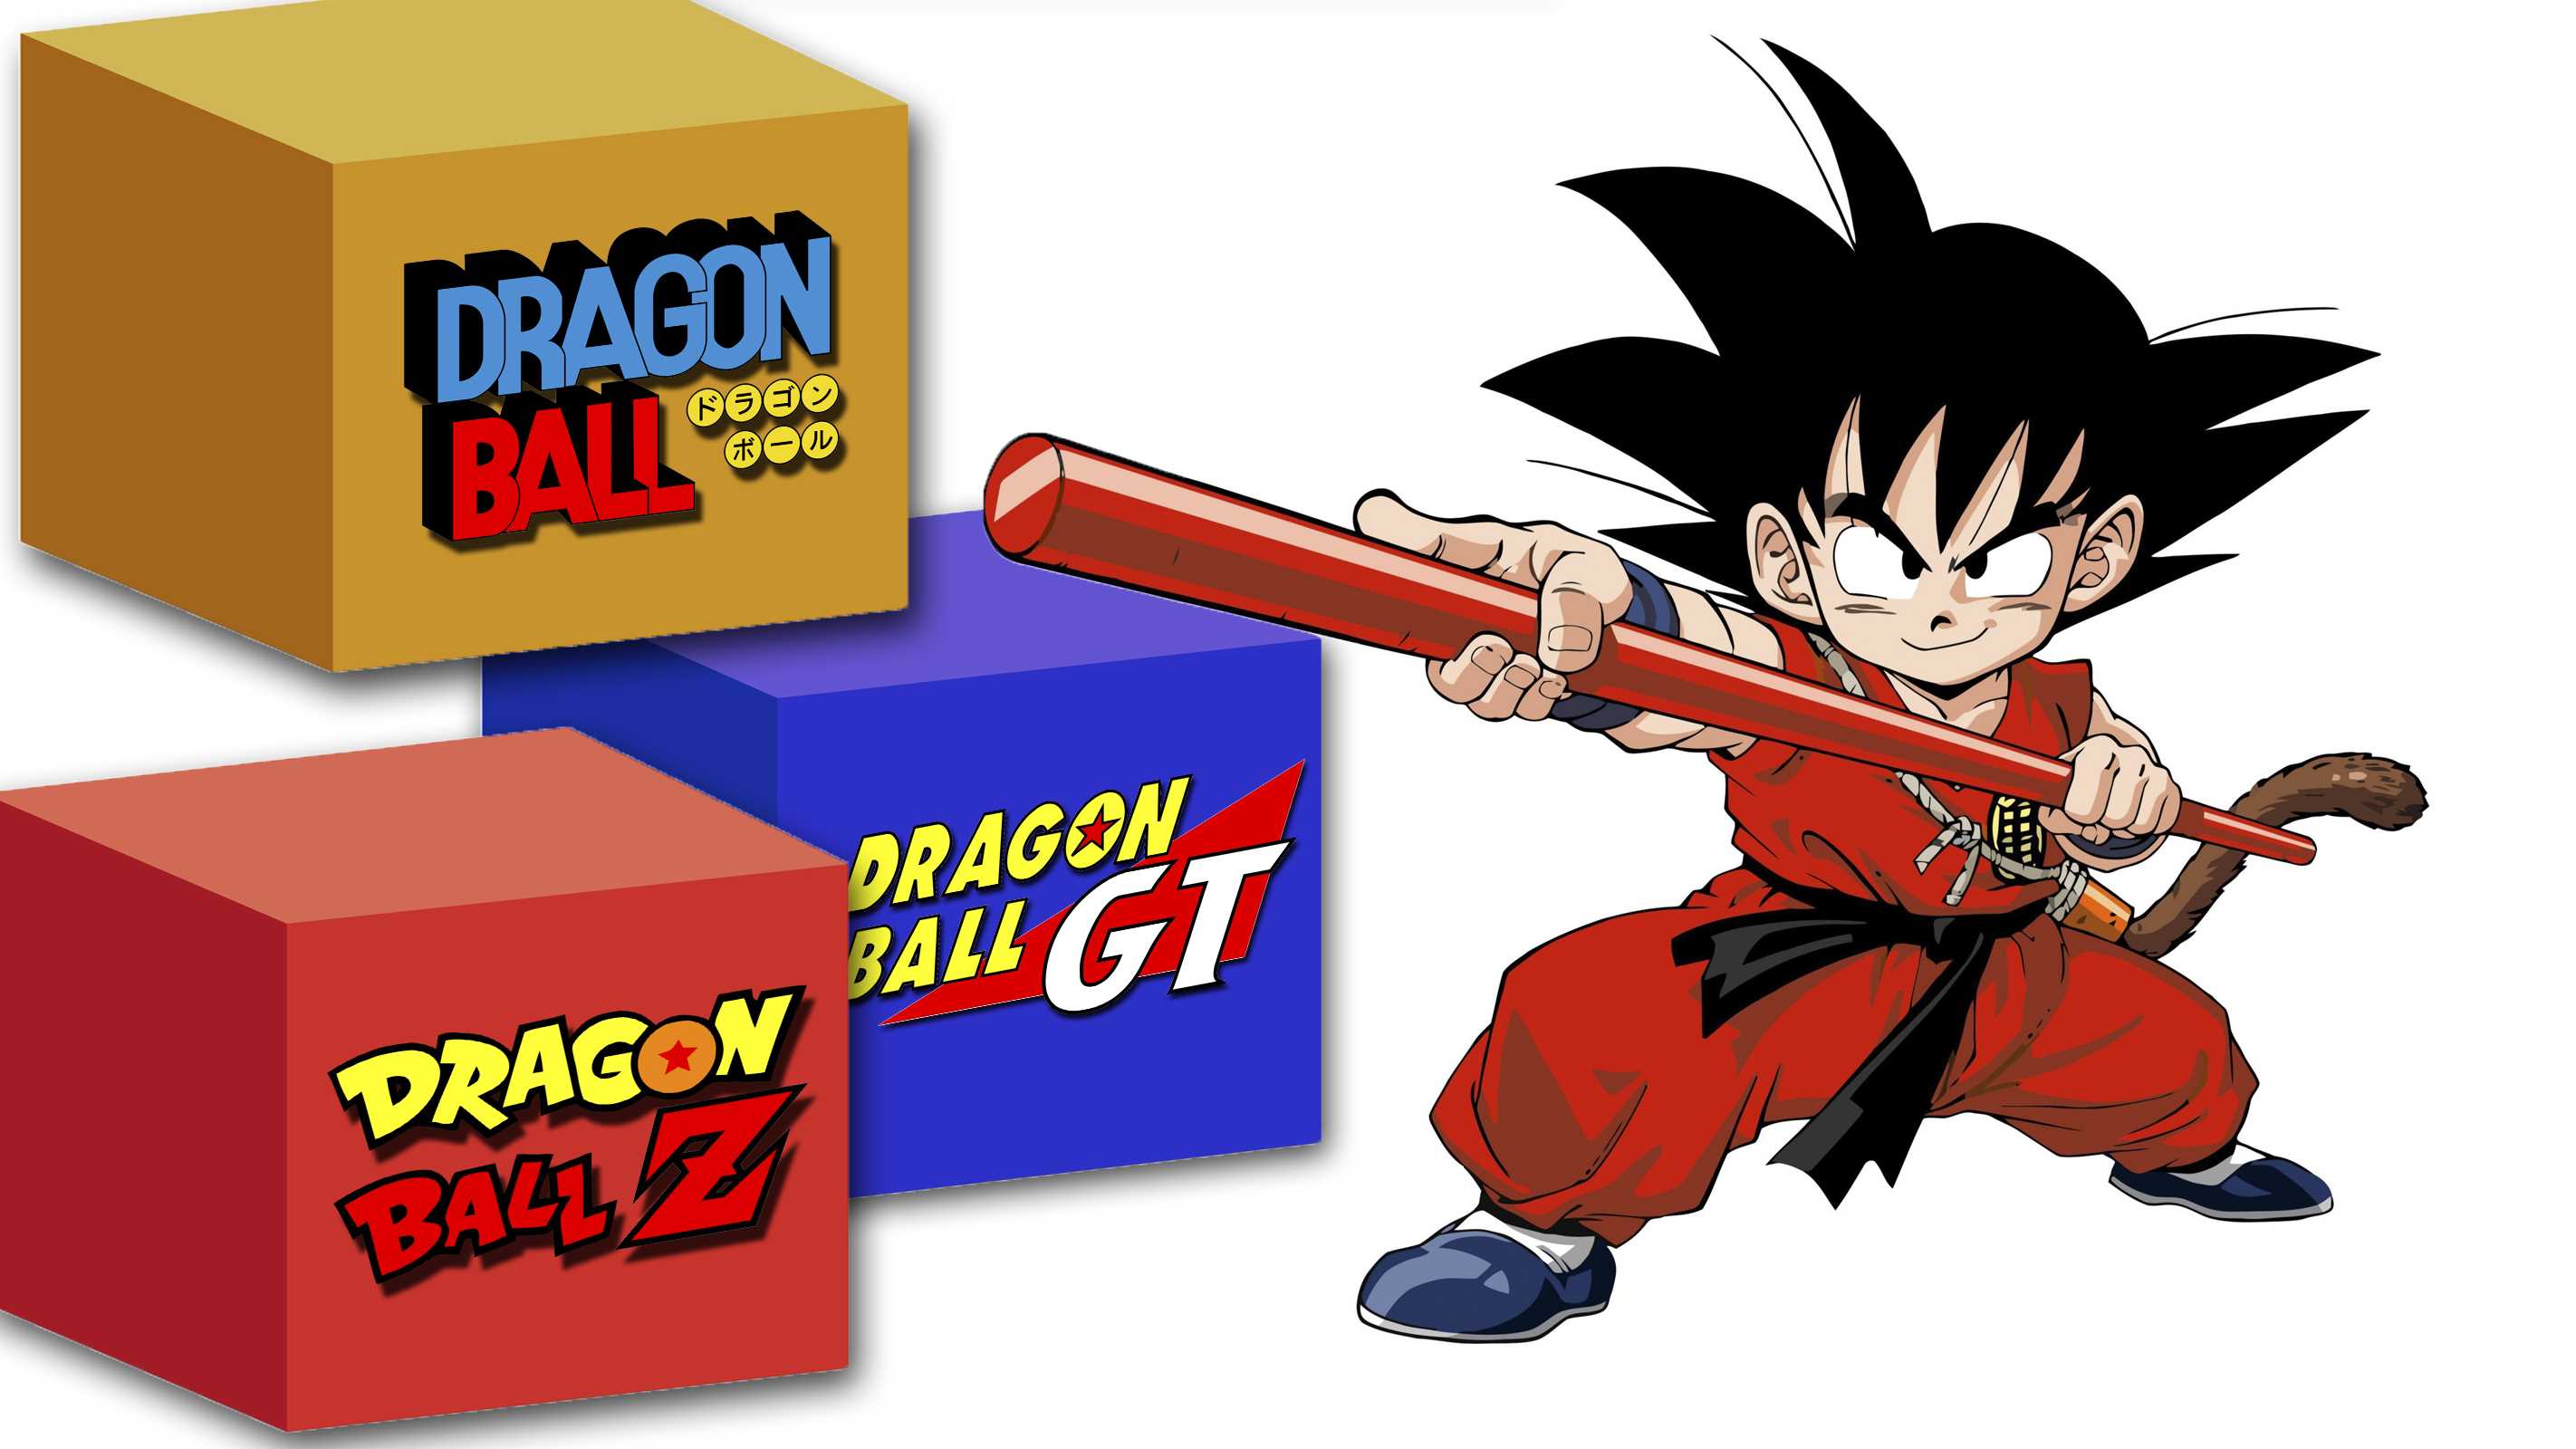 Dragon Ball series: original, DBZ or GT? 